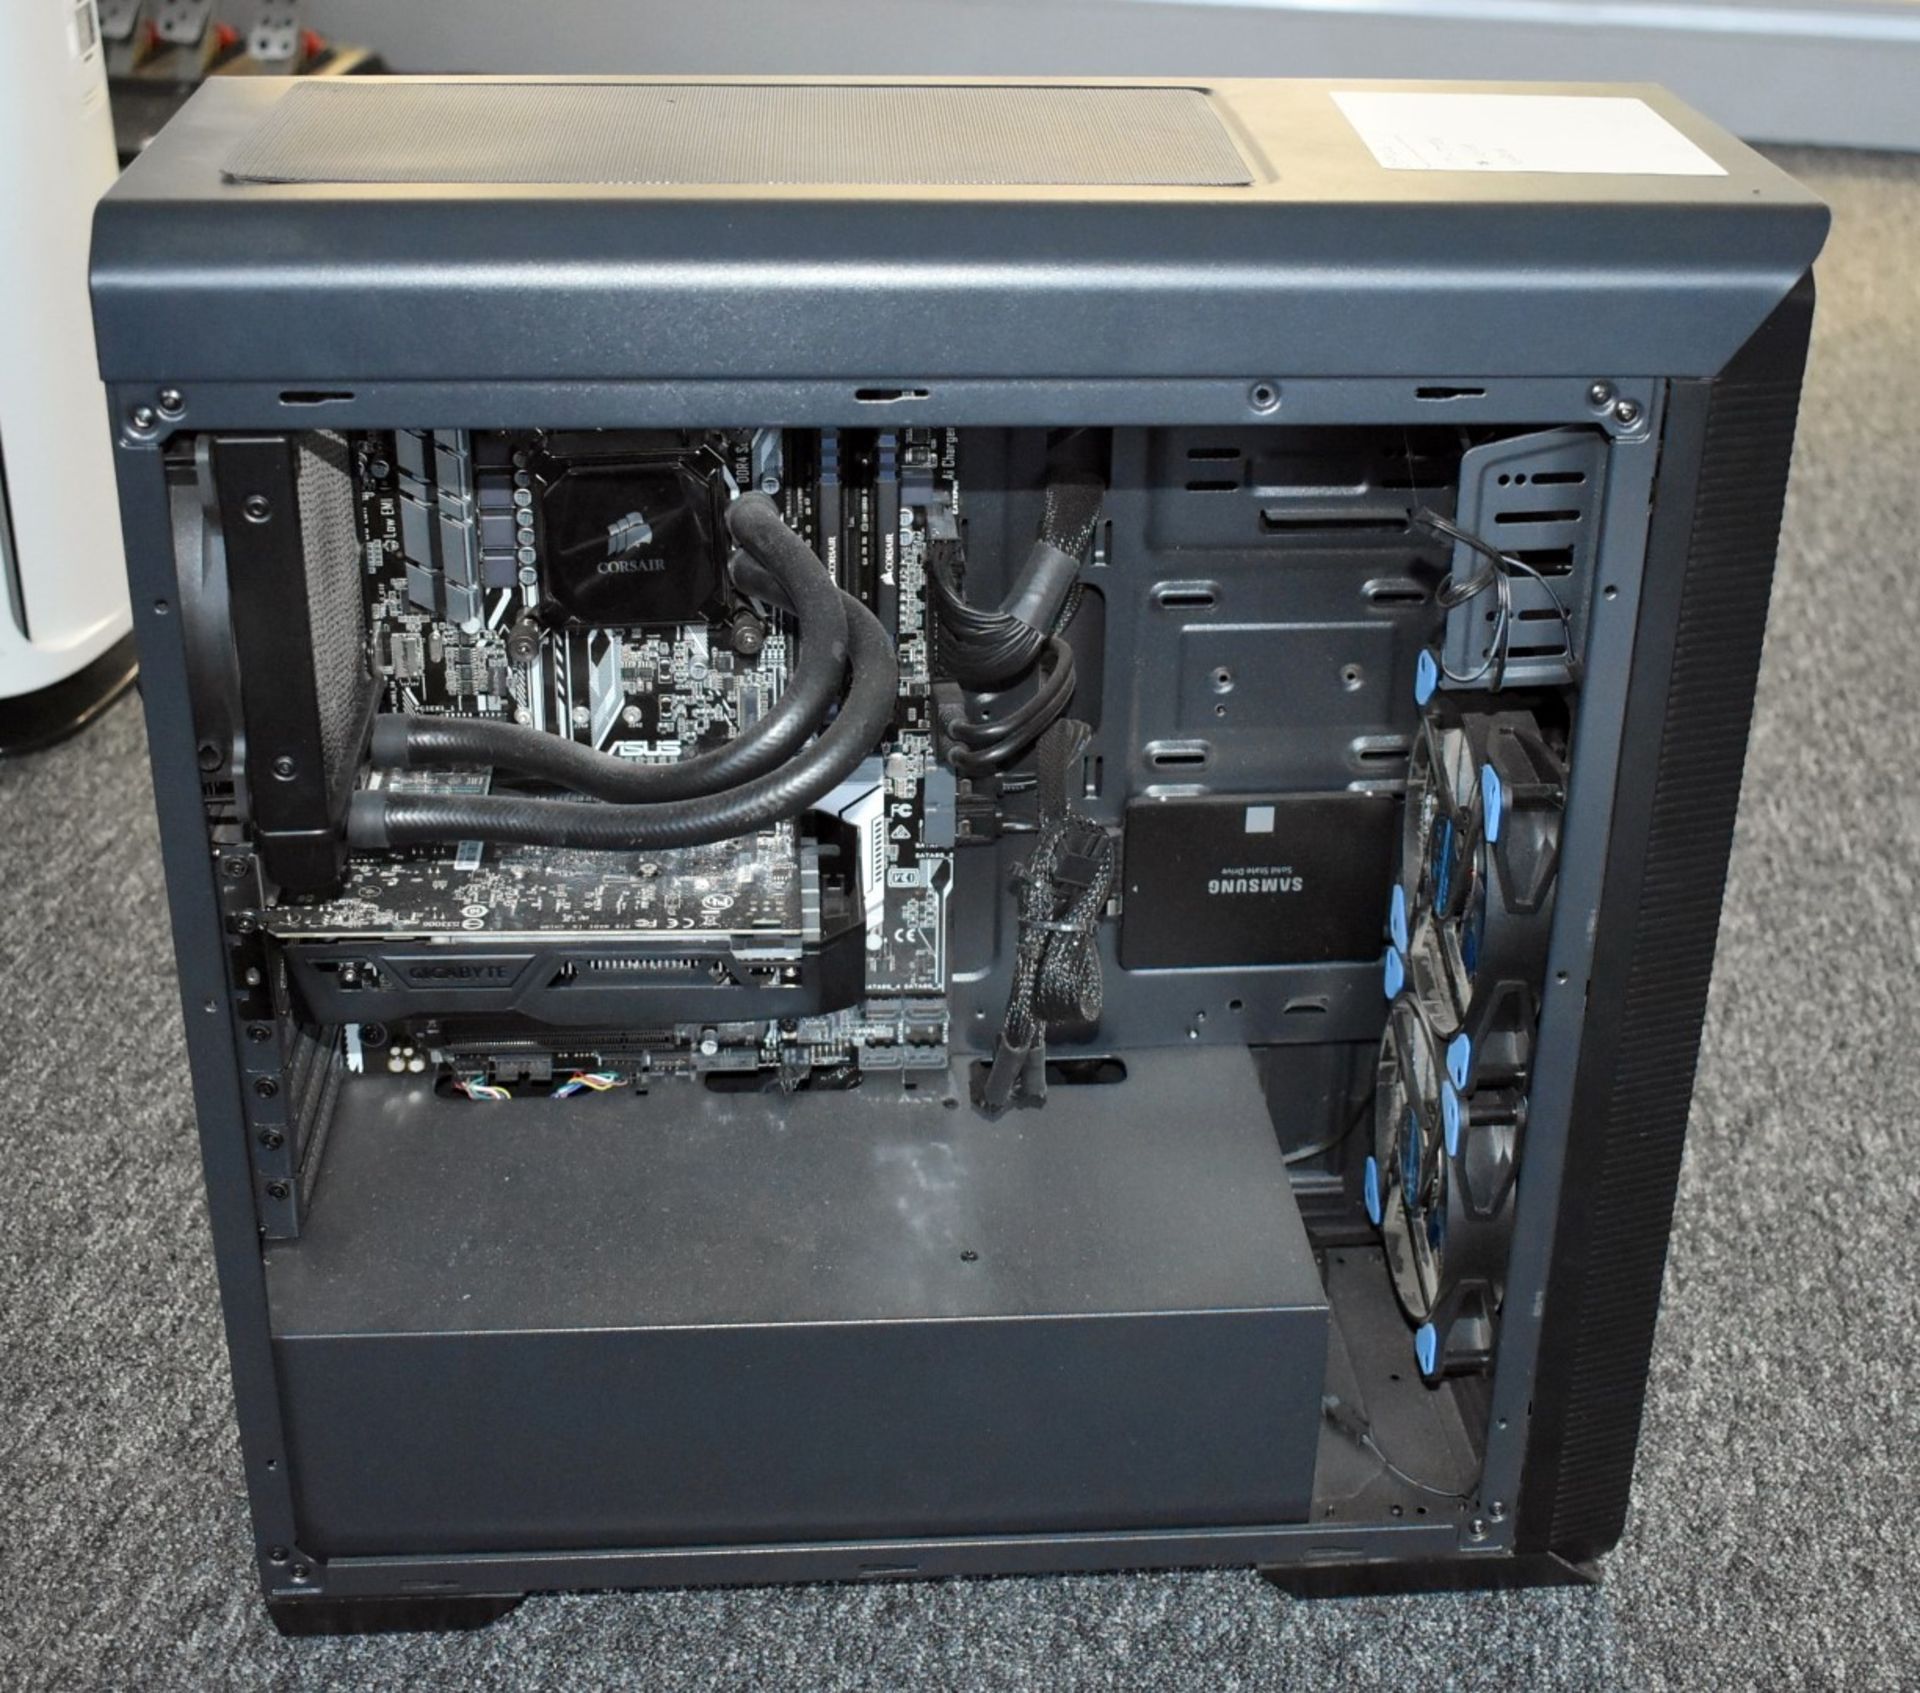 1 x Desktop Computer Featuring an Intel i7-7700k Processor, Asus USB 3.0 Motherboard, 16GB Corsair - Image 8 of 8